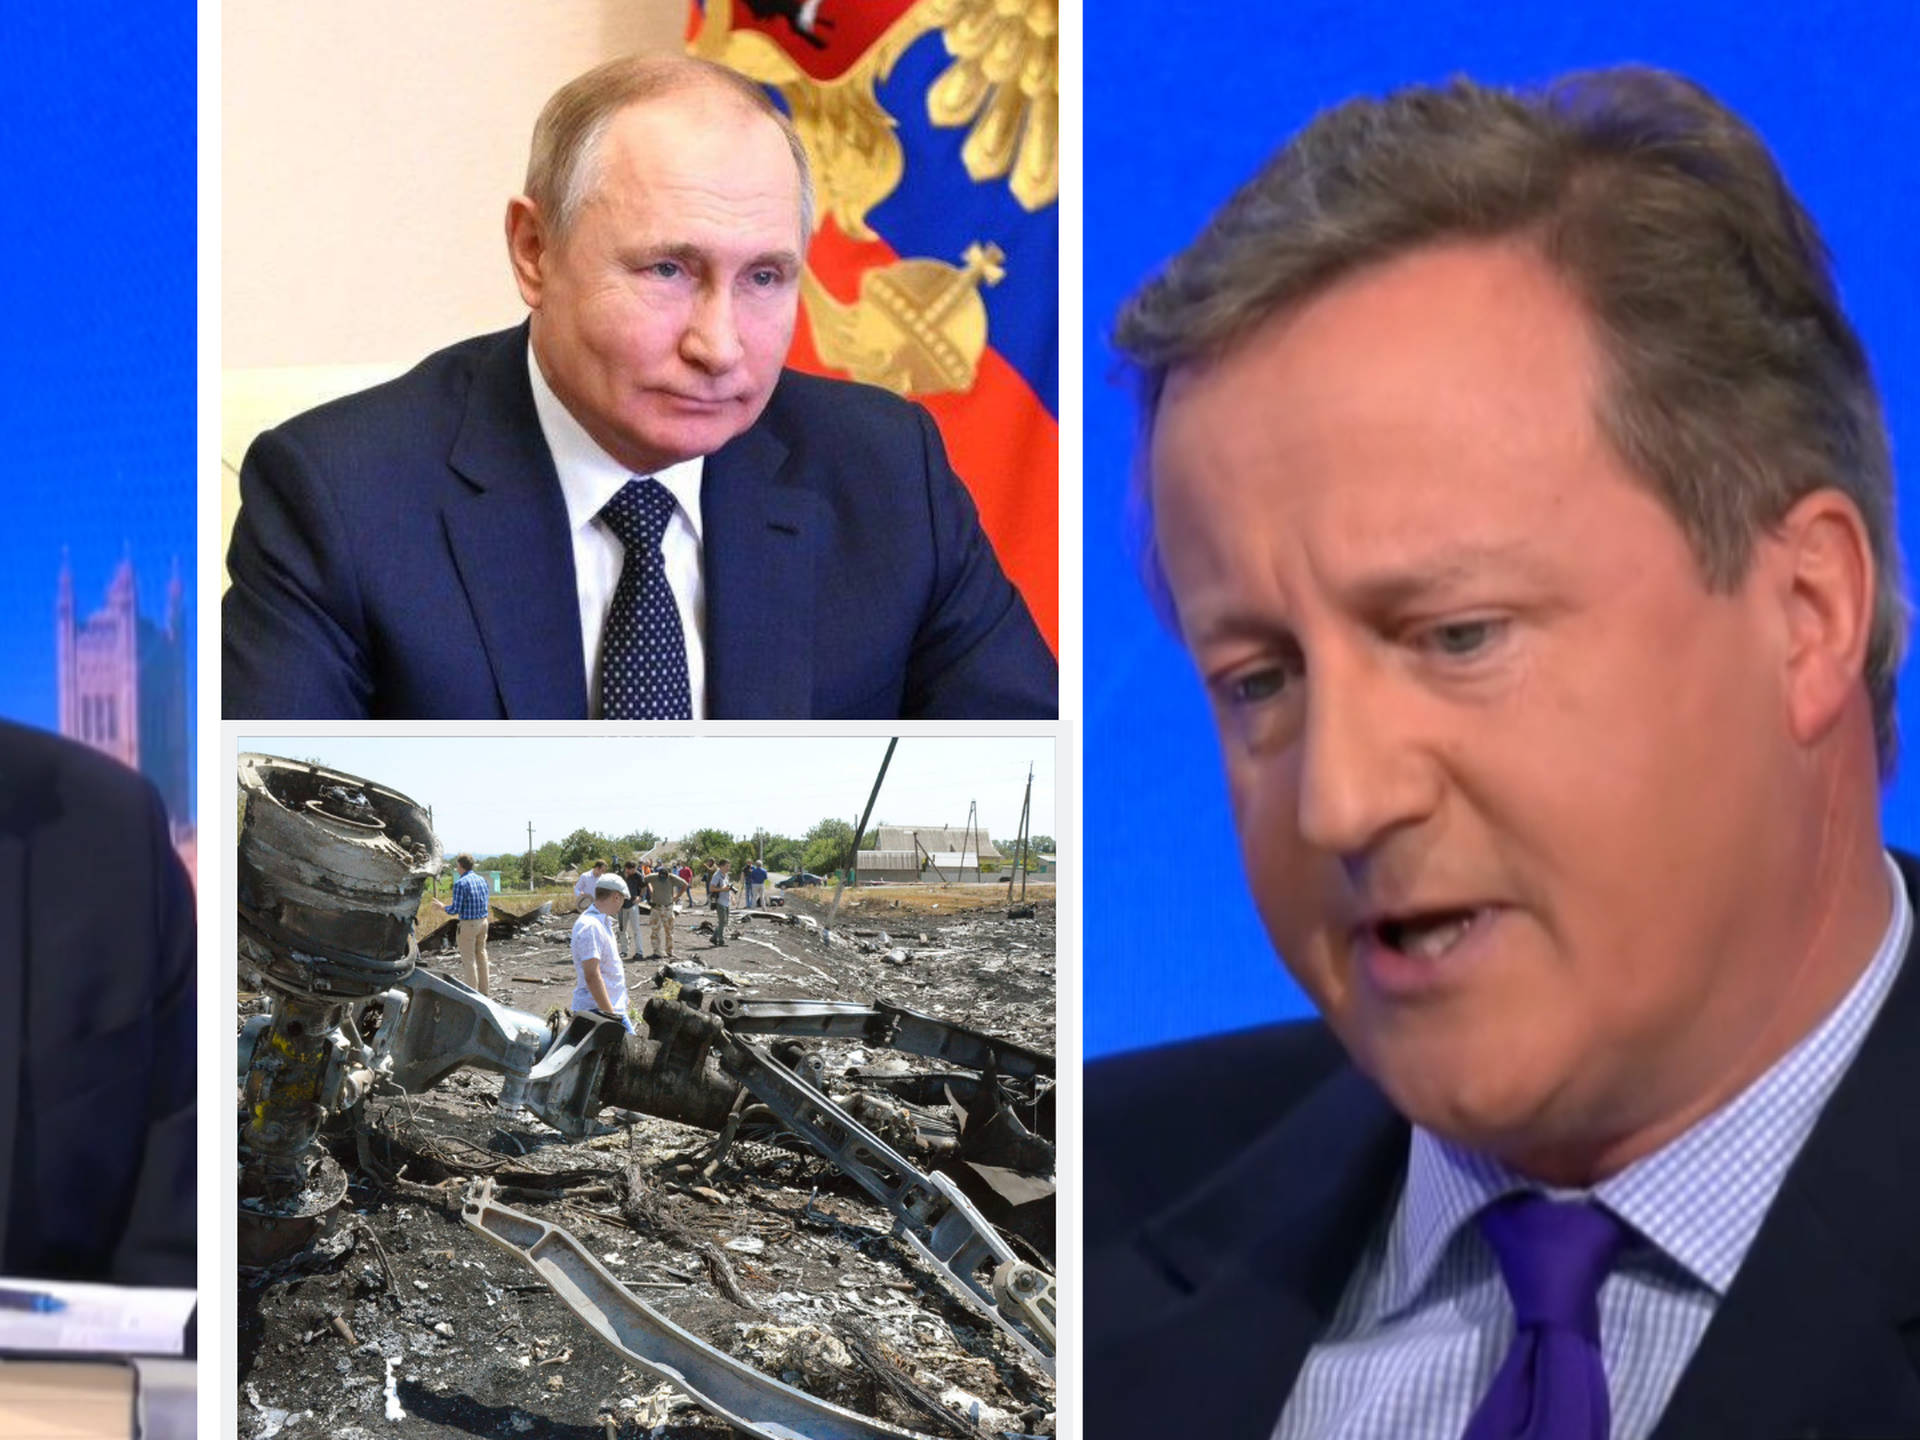 David Cameron brands Putin a 'phenomenal liar' who lied over shooting down MH17 - LBC